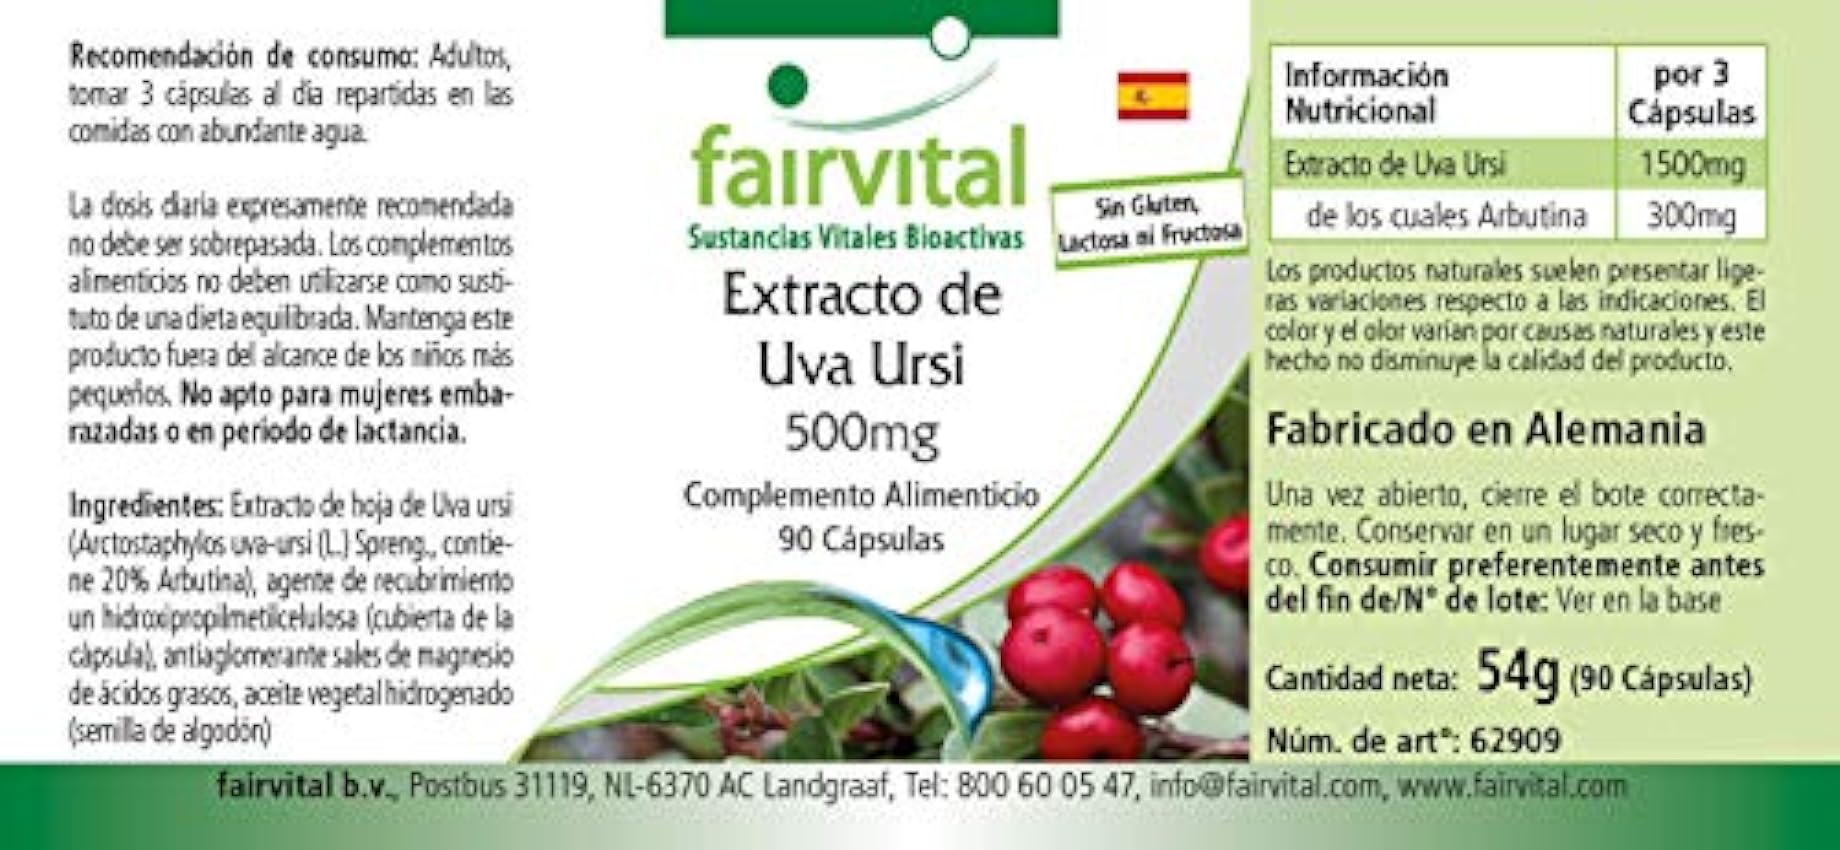 Fairvital | Extracto de Gayuba 500mg - Uva Ursi - Dosis elevada - 20% de Arbutina - VEGANO - 90 Cápsulas - Calidad Alemana gjItEcv9